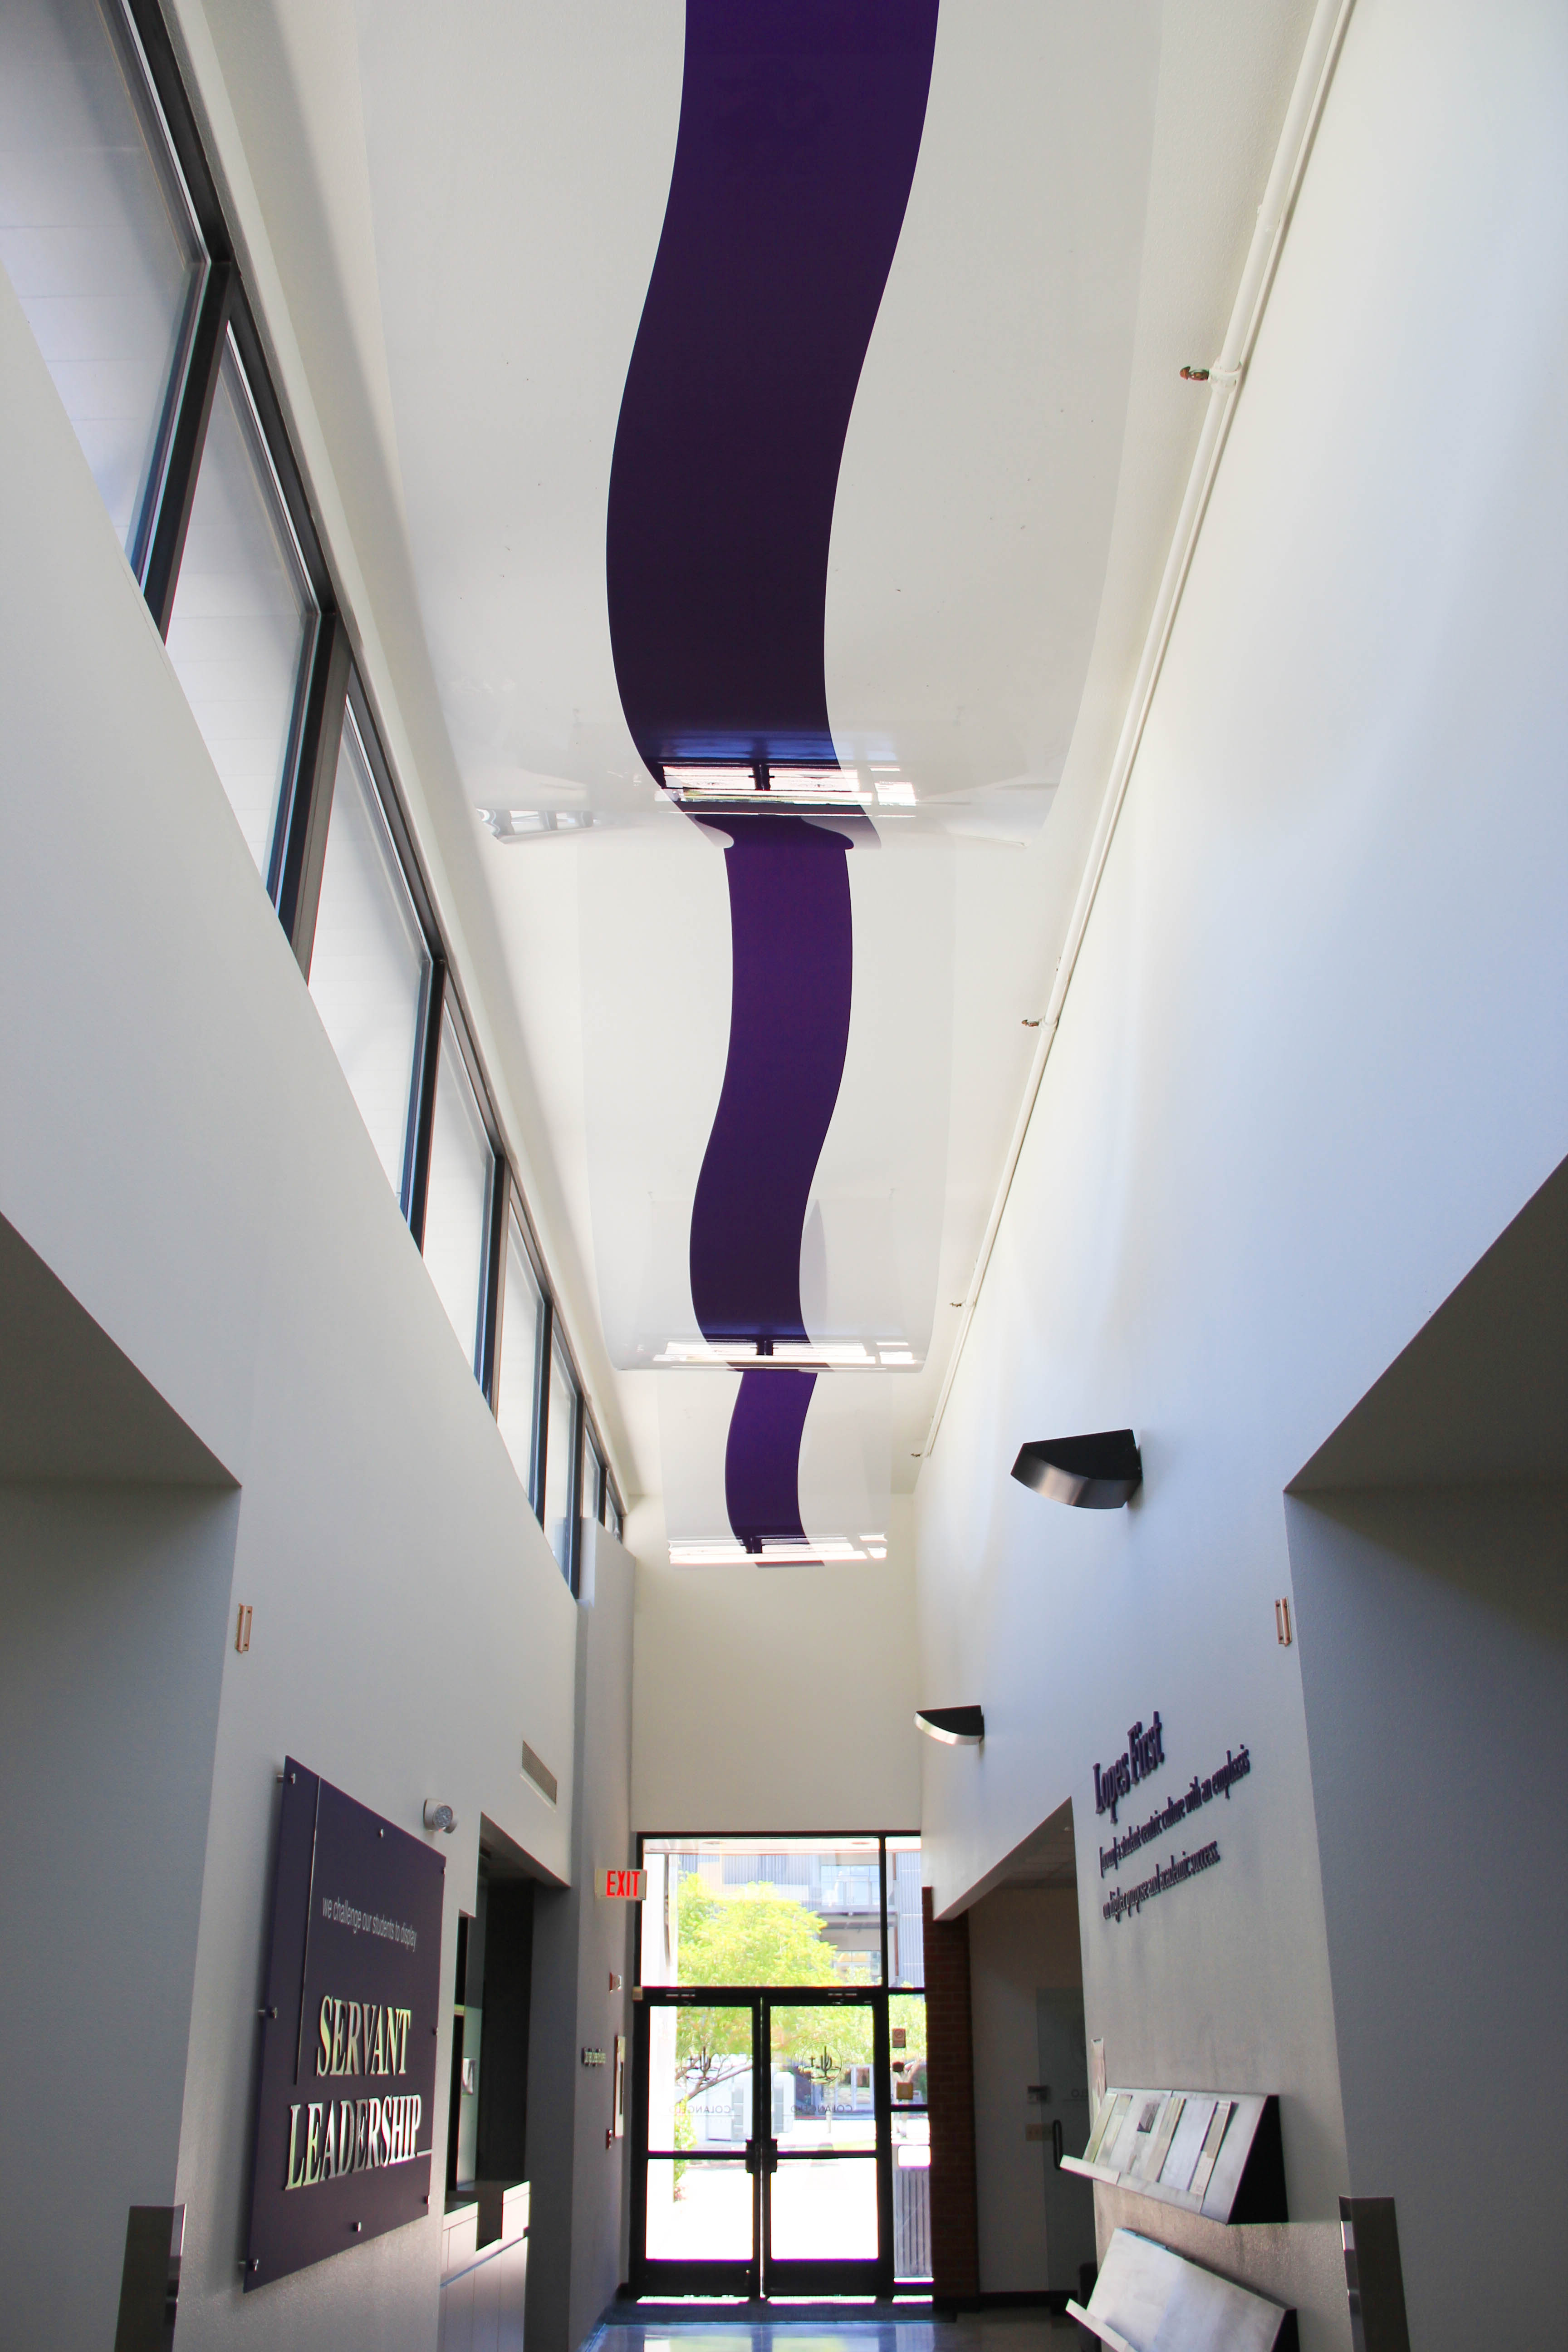 custom environmental graphics on GCU ceiling